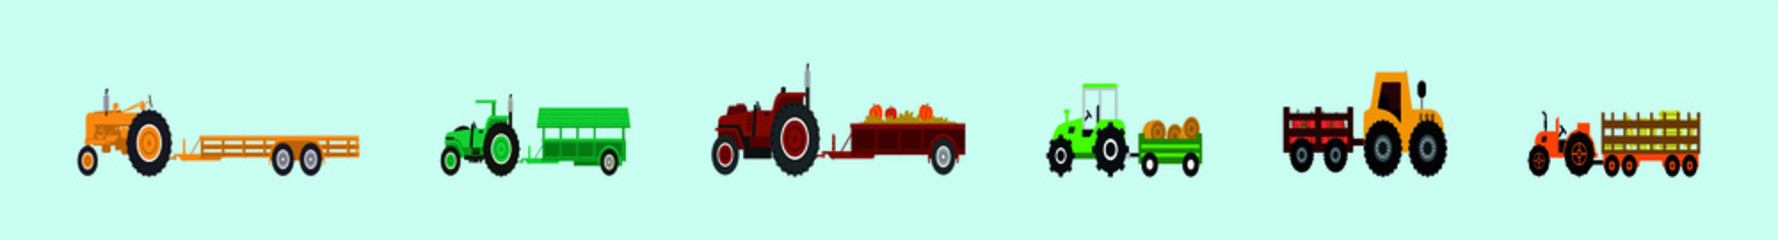 set of farmer transportation cartoon icon design template with various models. vector illustration